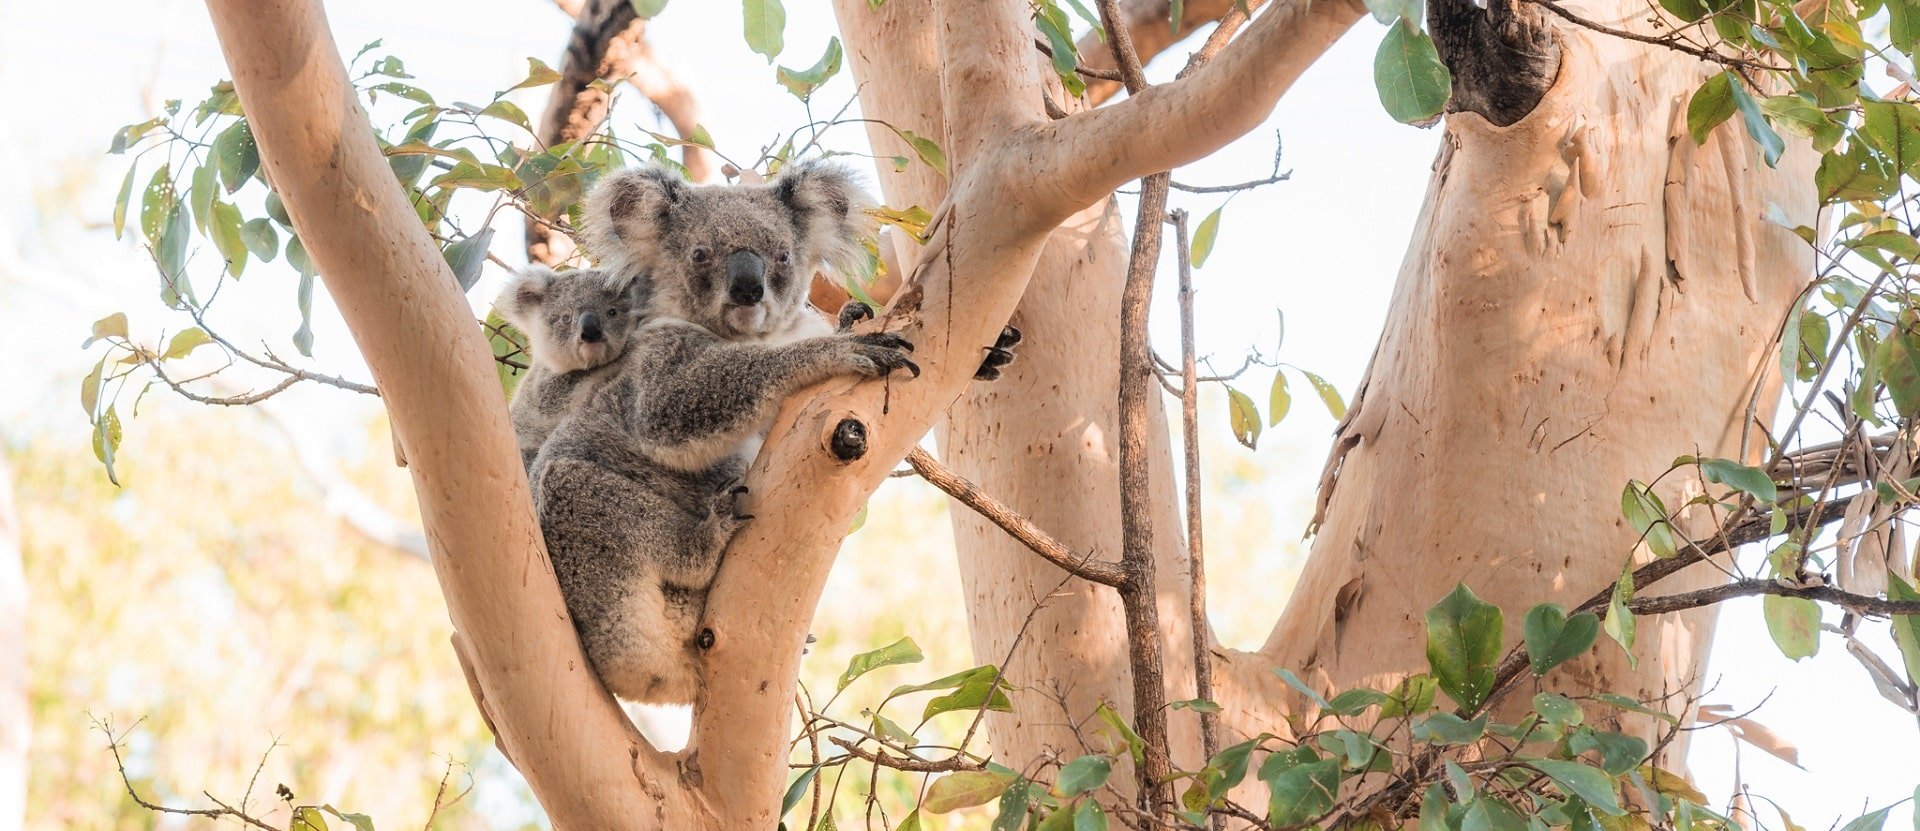 Koala in the wild, Magnetic Island, Queensland